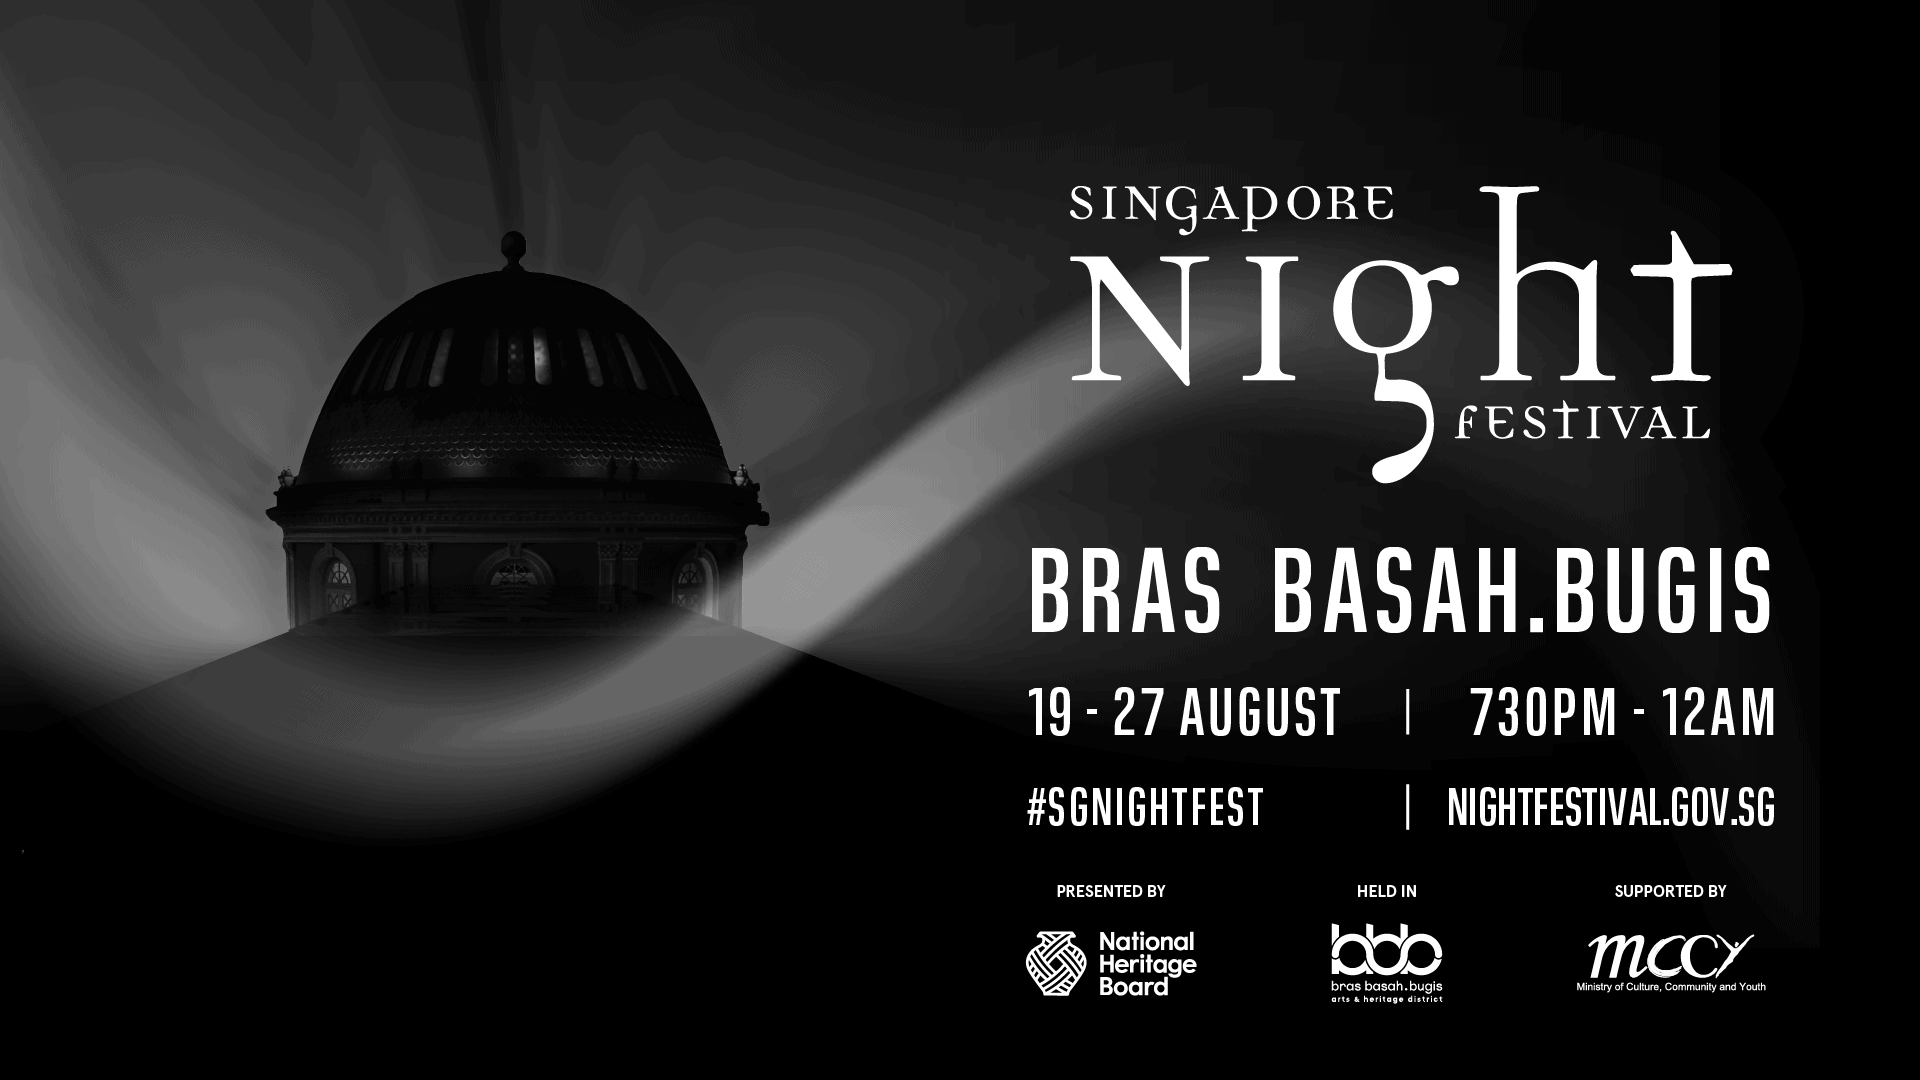 Singapore Night Festival City Nomads